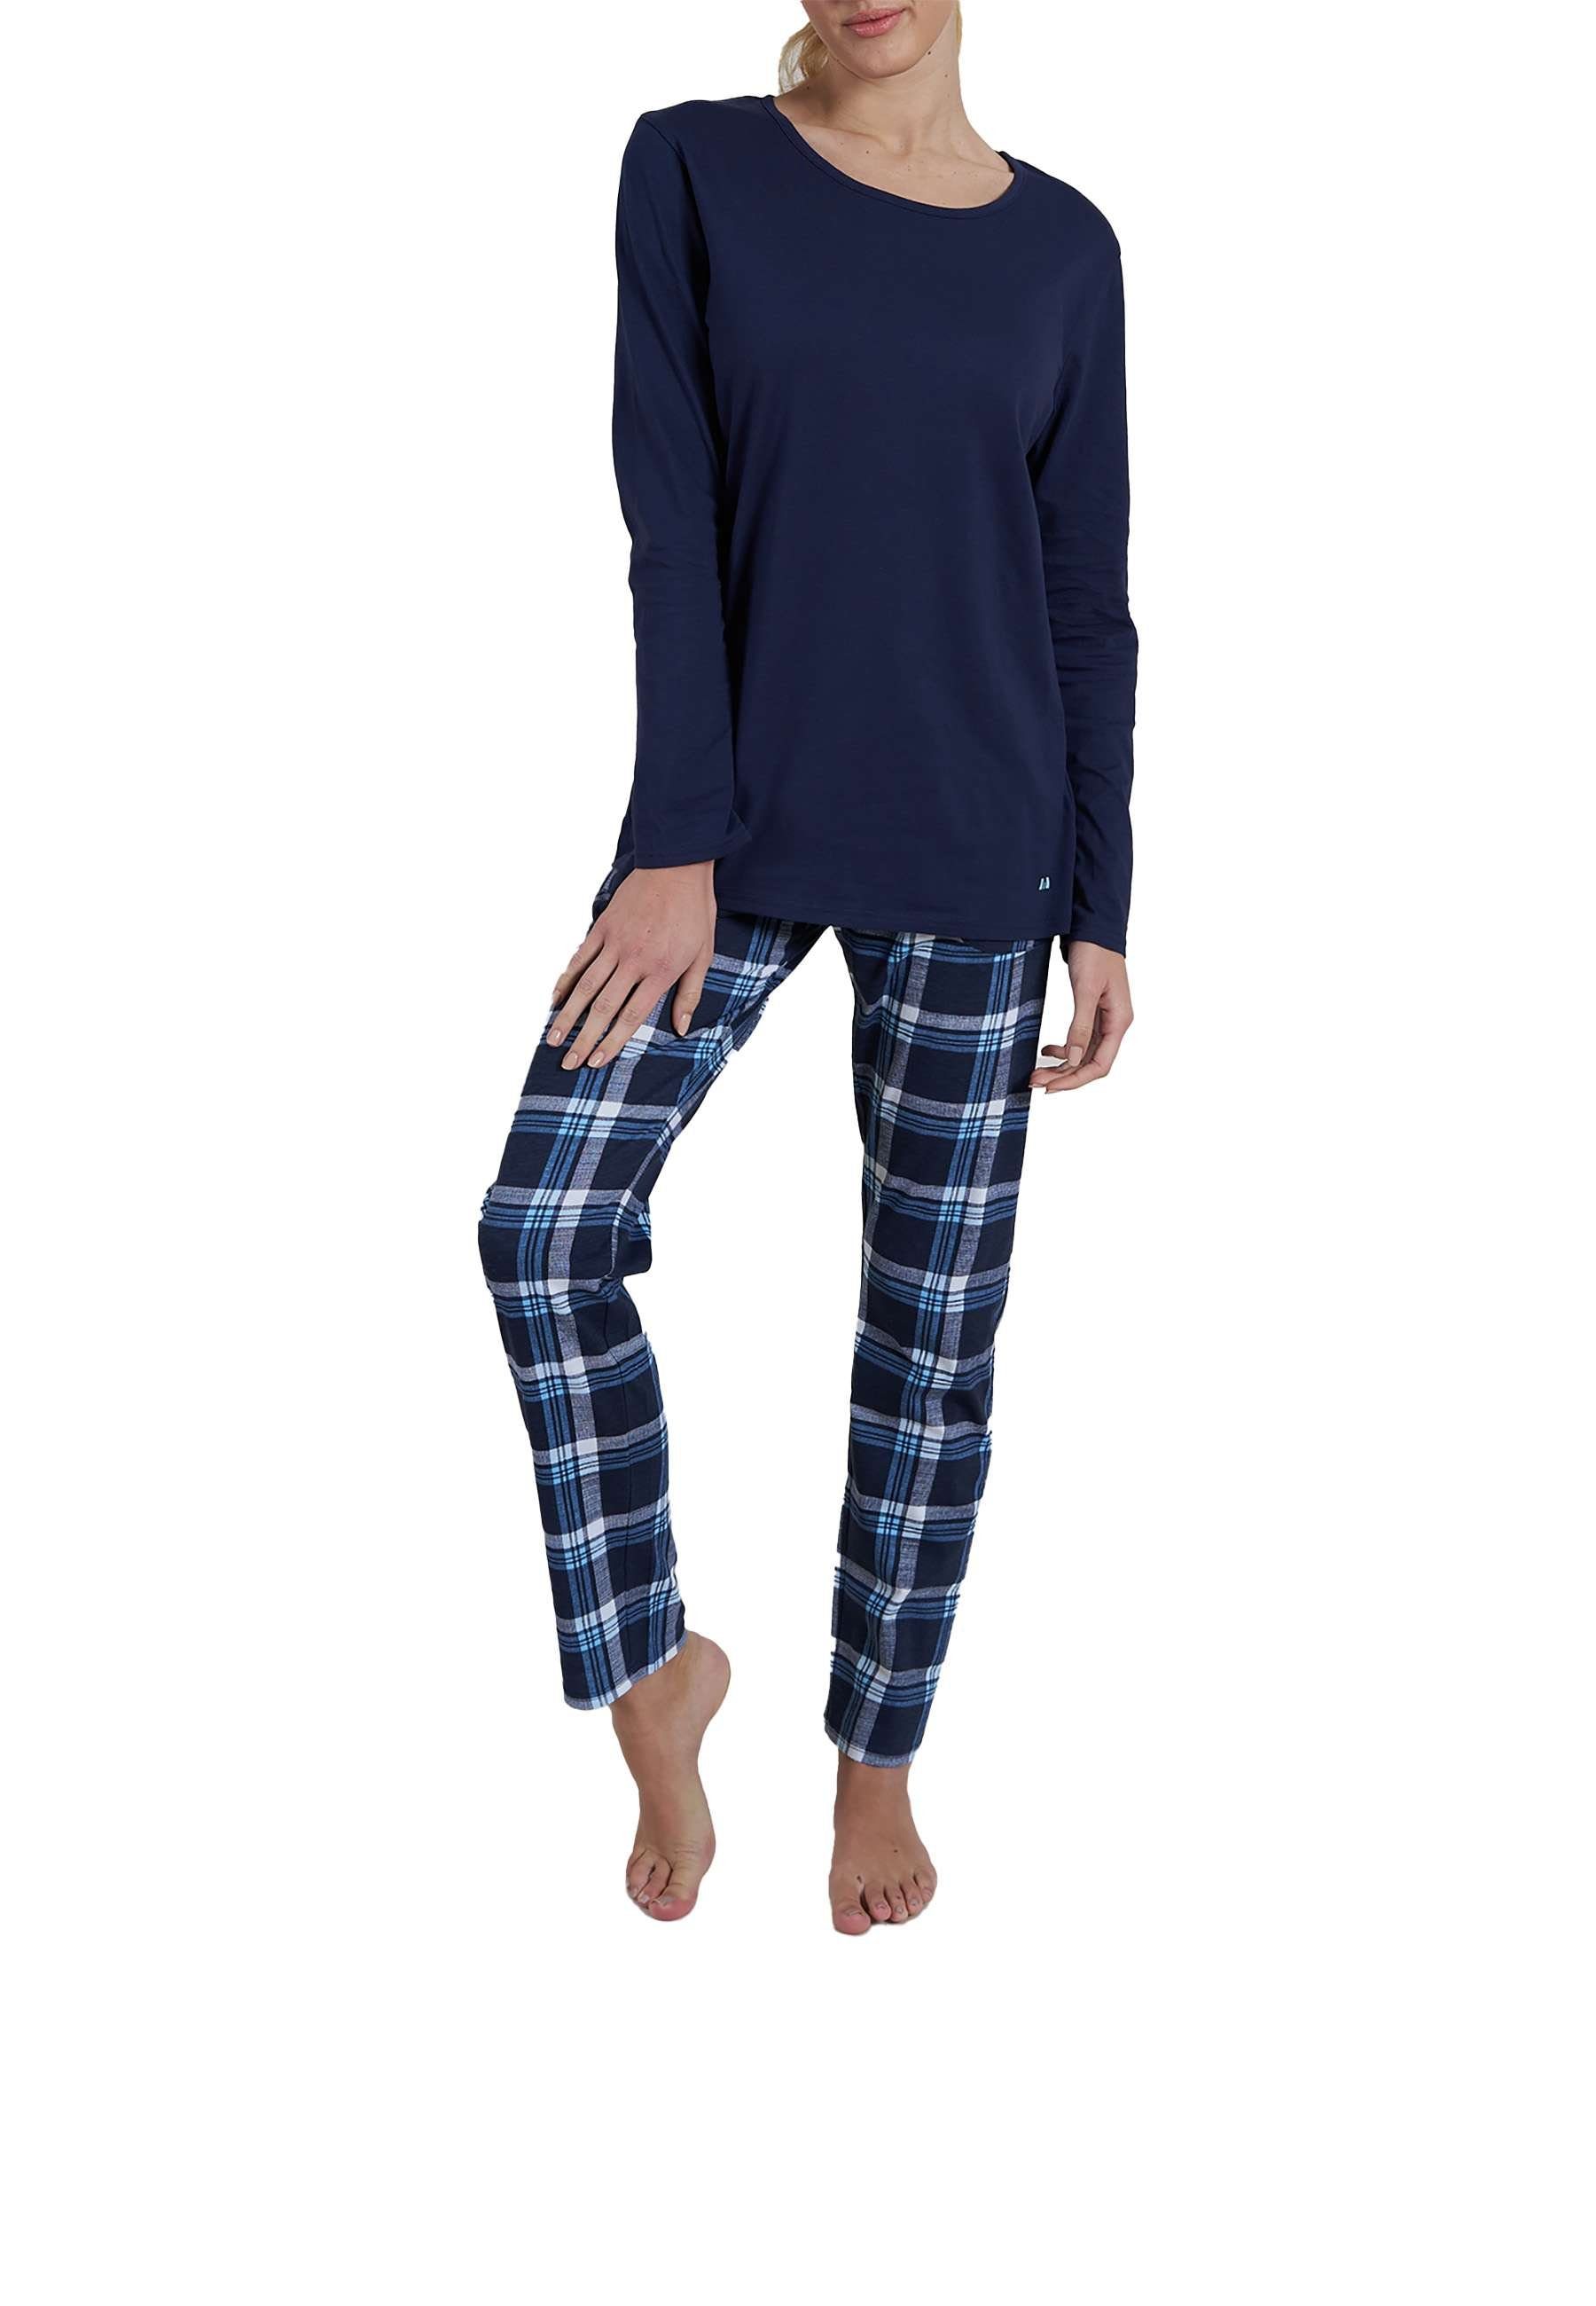 Langarm Pyjama online kaufen | OTTO